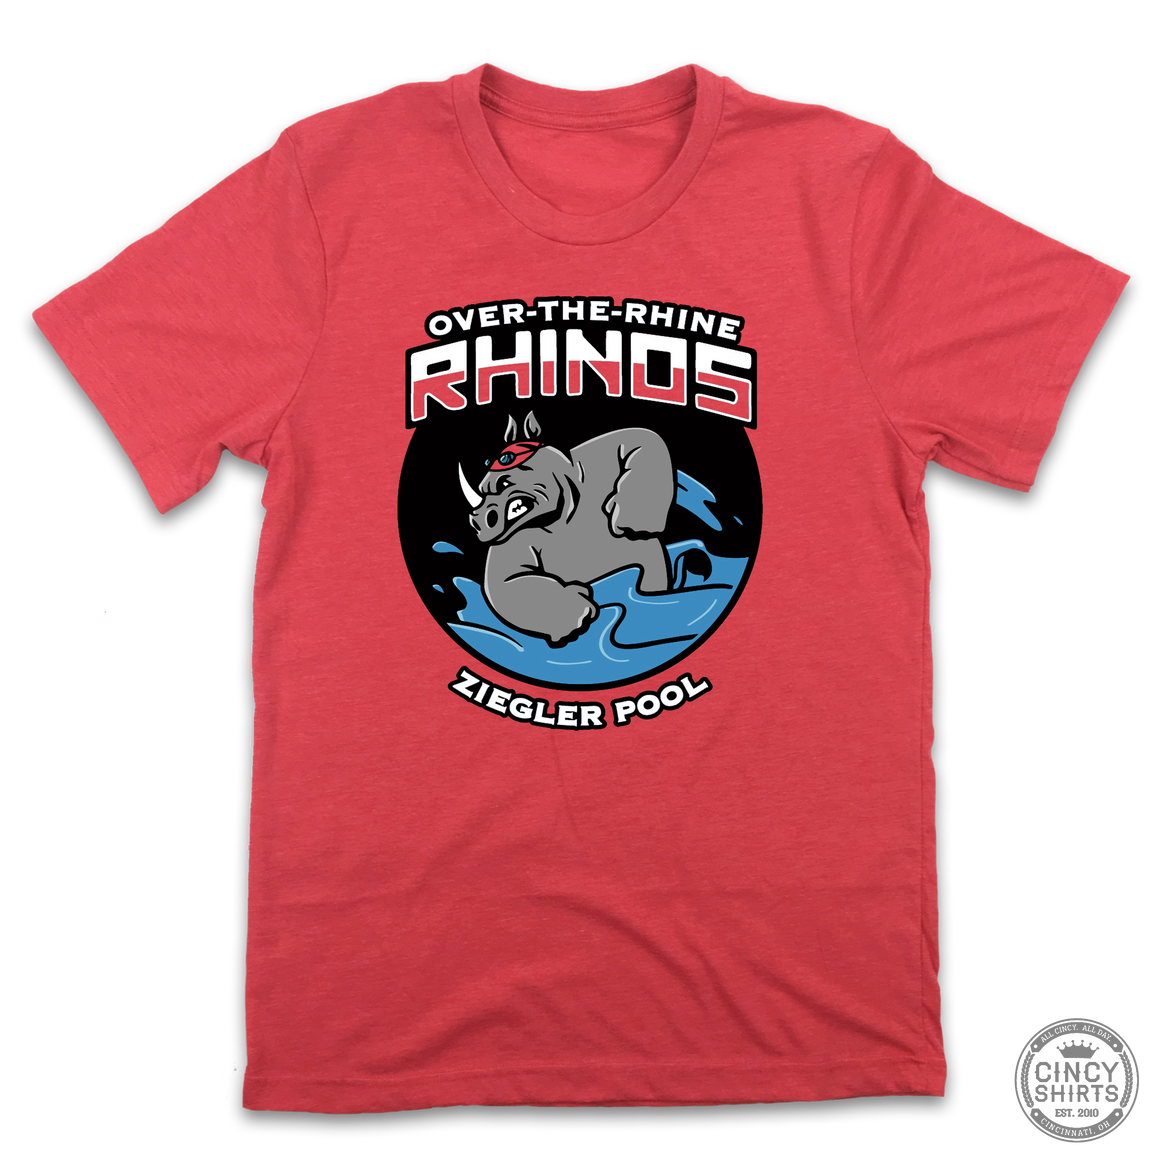 Over-The-Rhine Rhinos - Ziegler Park Swim Team - Cincy Shirts